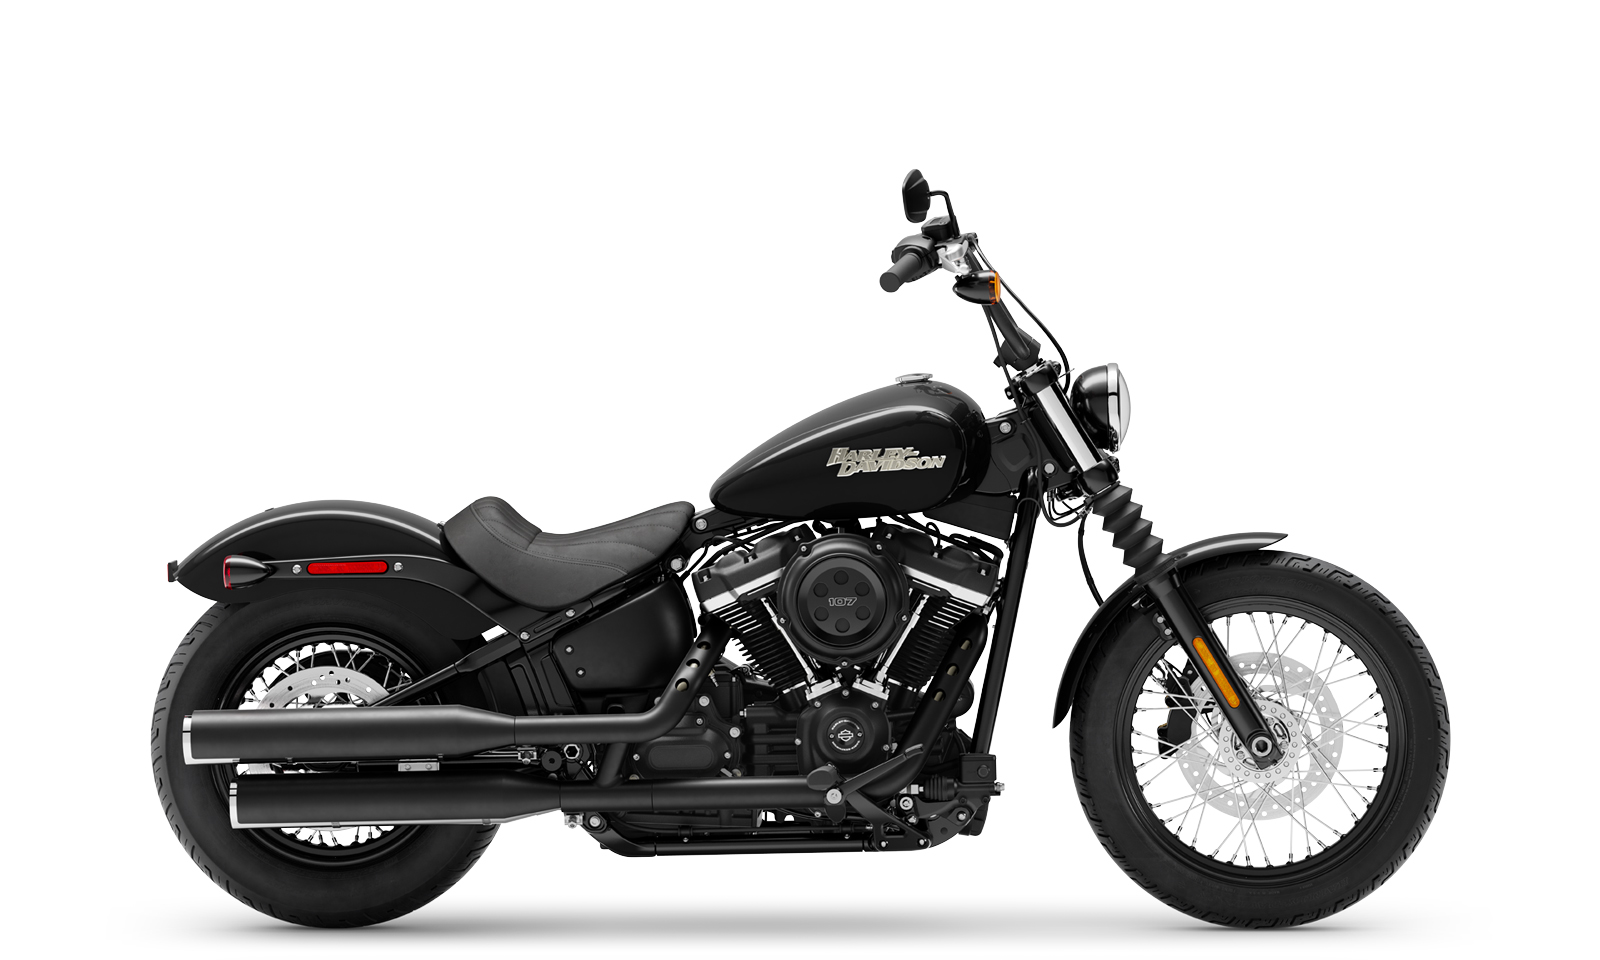 2020 Street Bob Motorcycle Harley Davidson